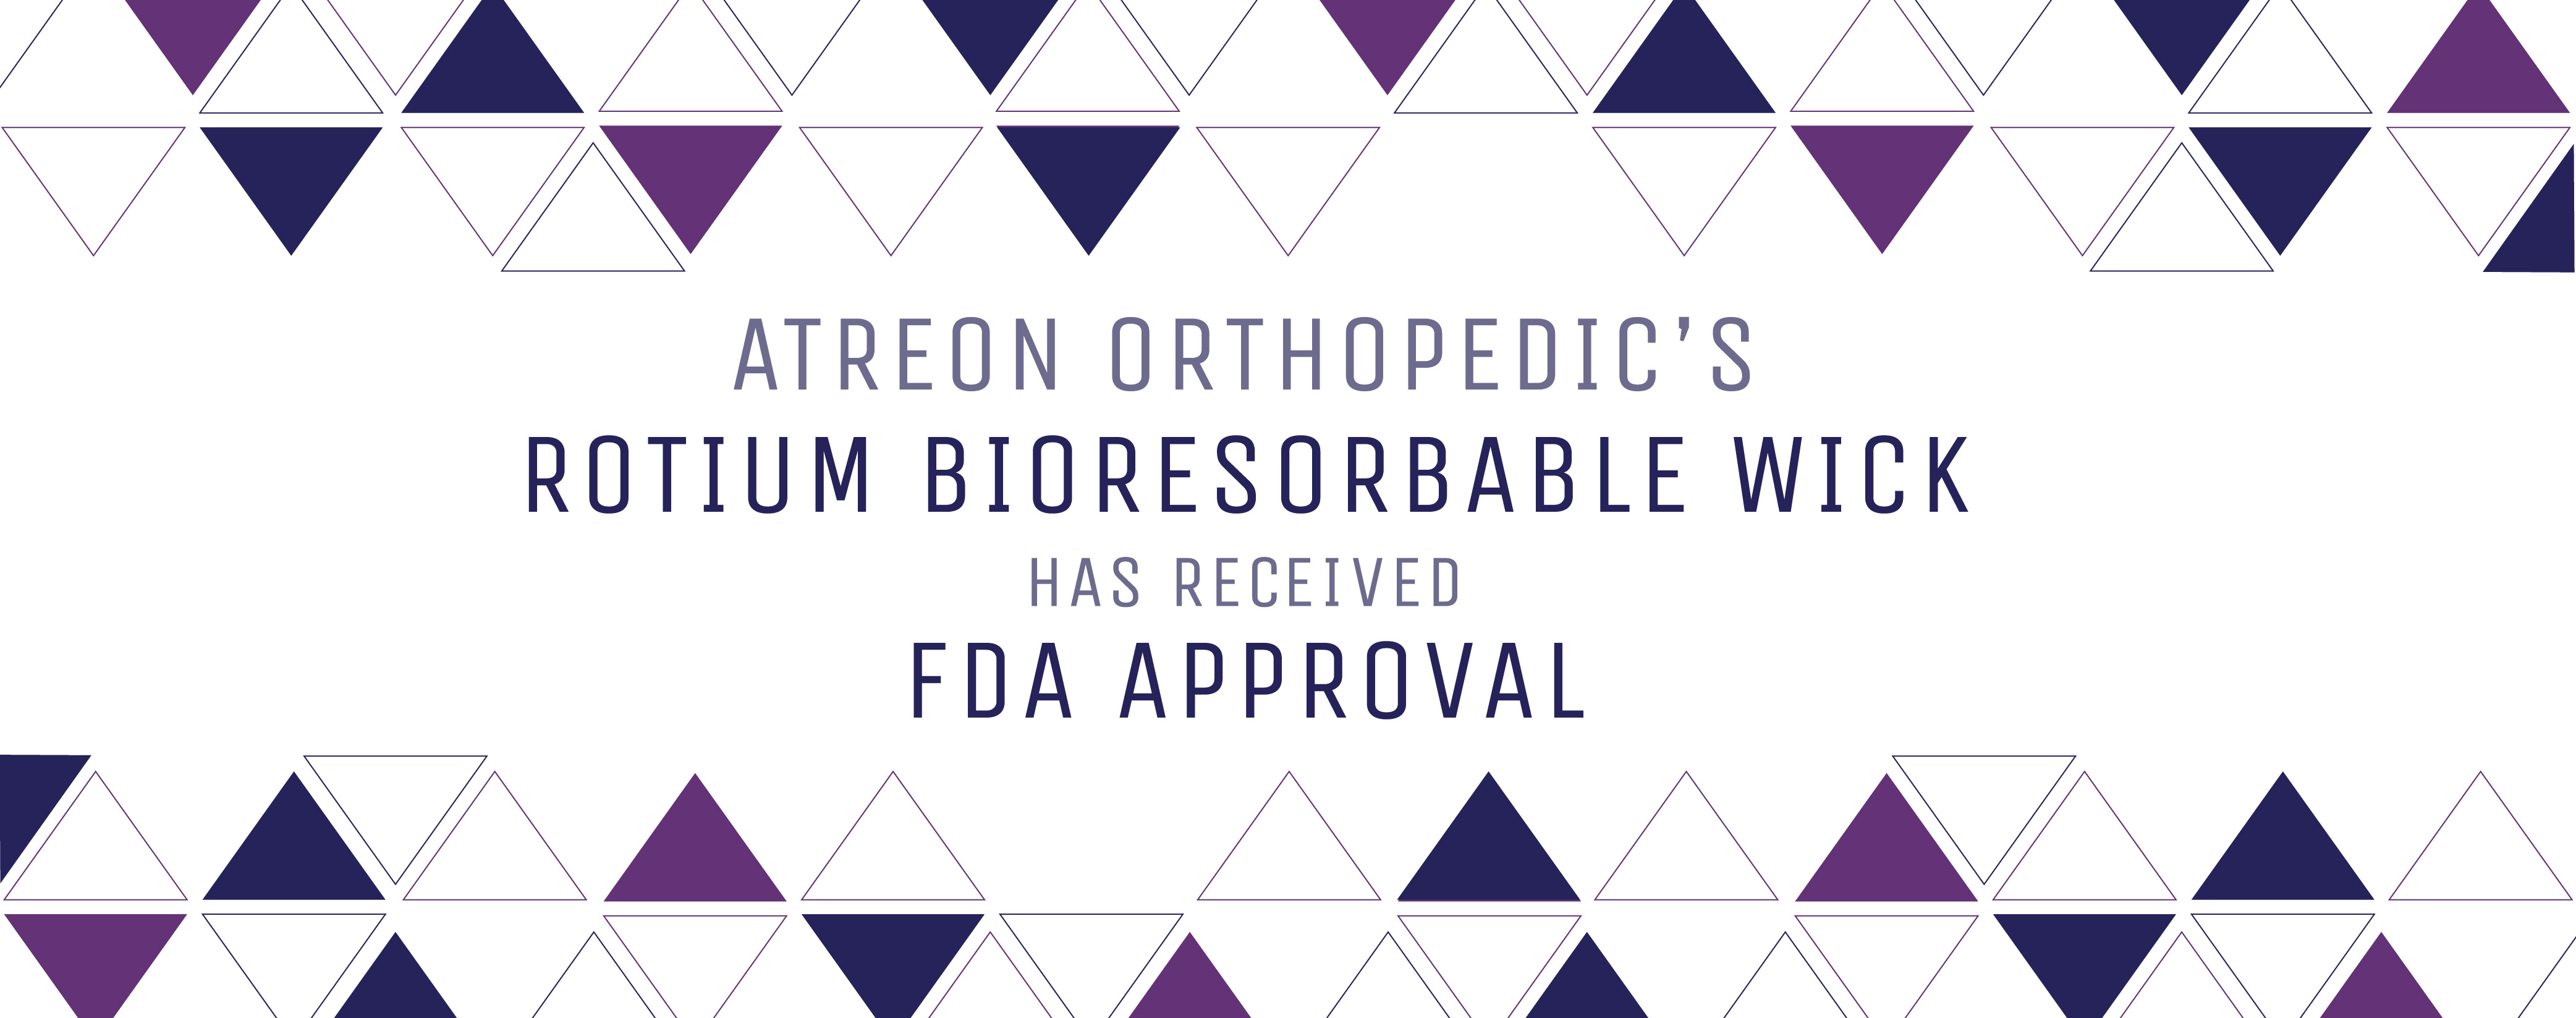 Atreon-Orthopedics-Rotium-Bio-Resorbable-Wick-News-Events